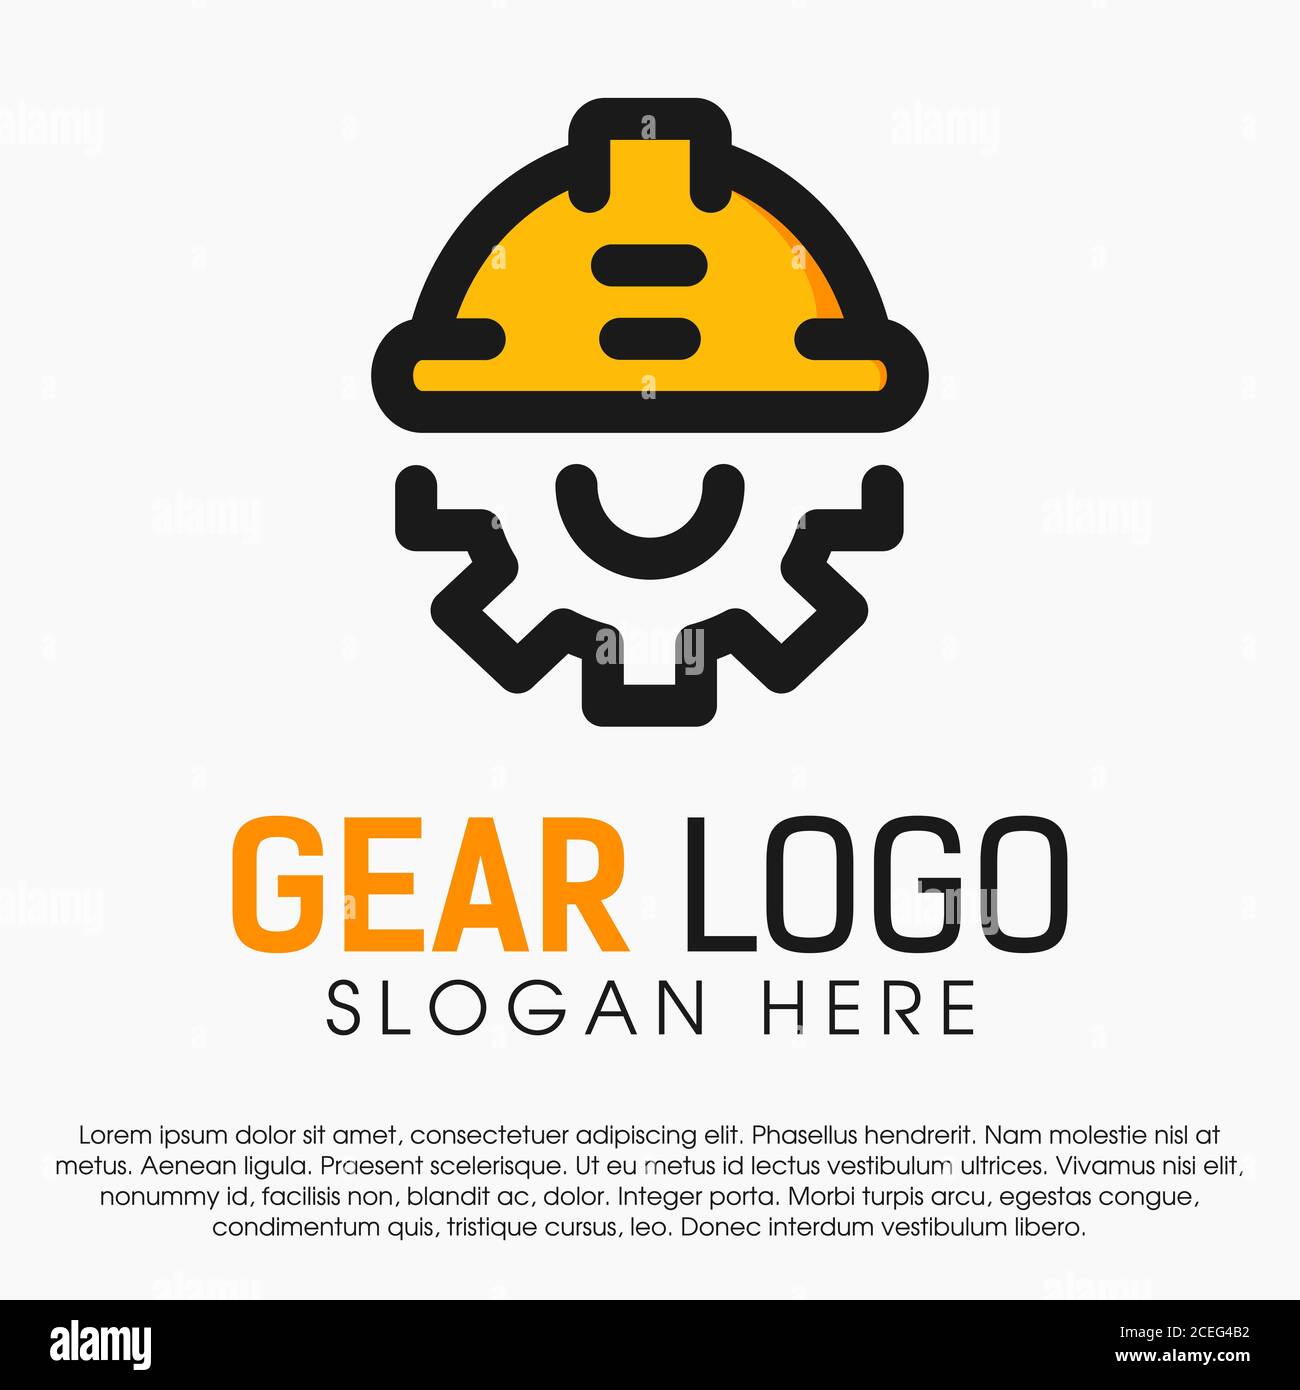 engineering logo design samples